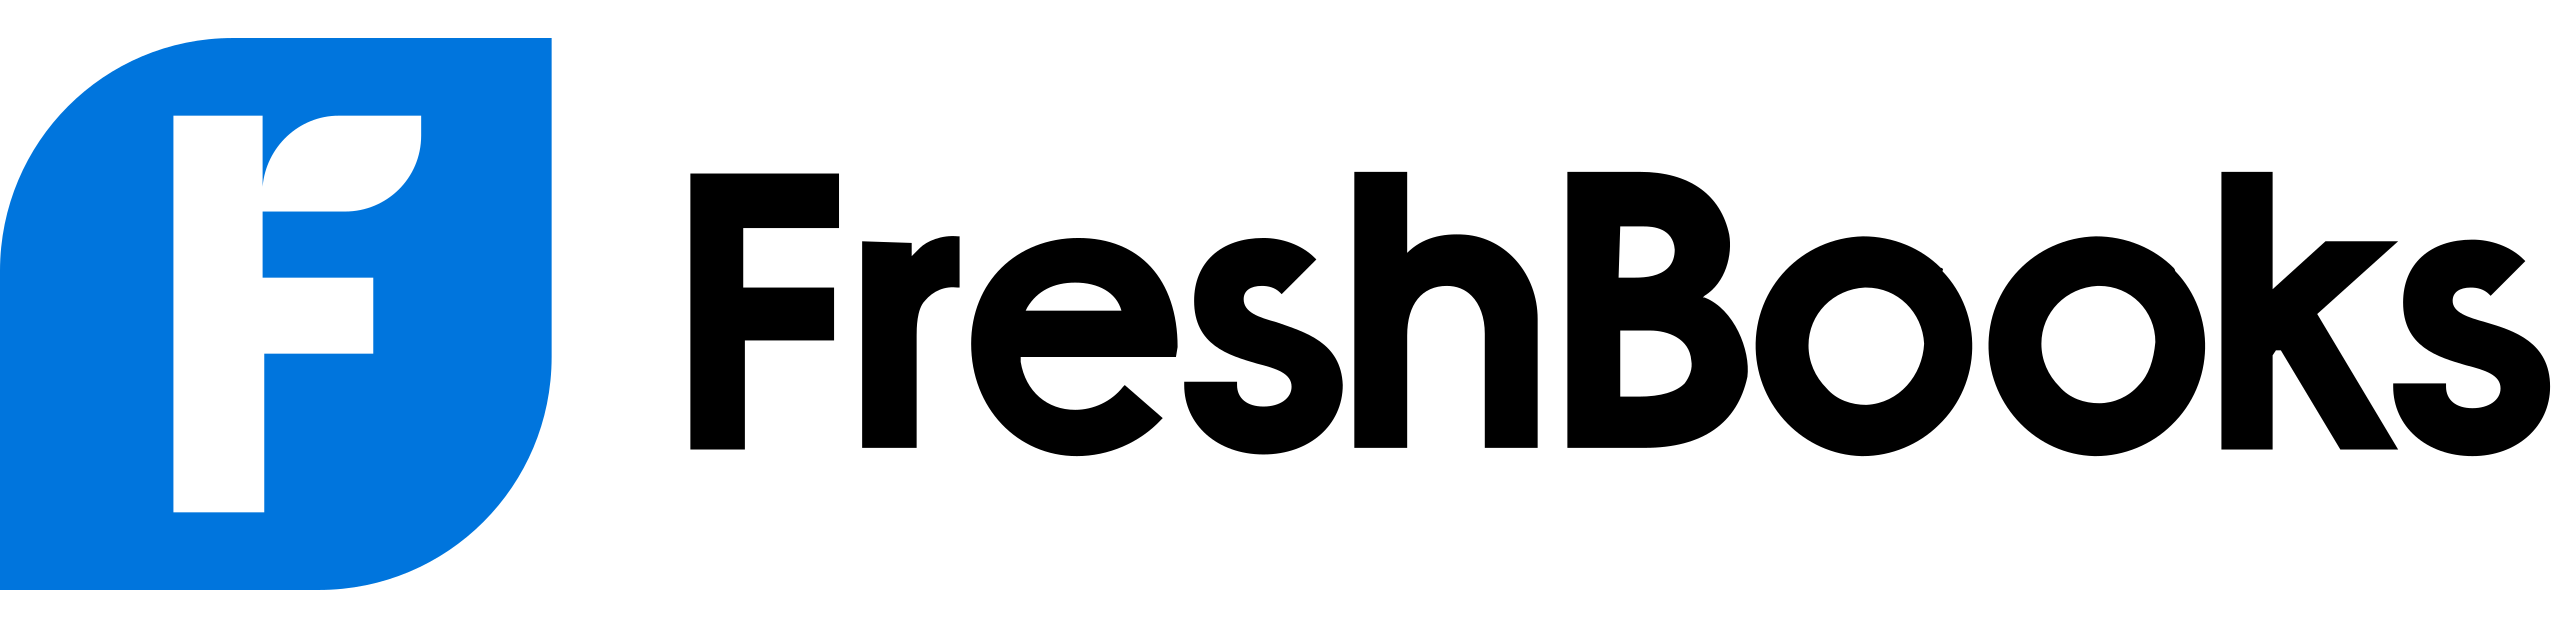 File:FreshBooks logo (2020).svg - Wikipedia